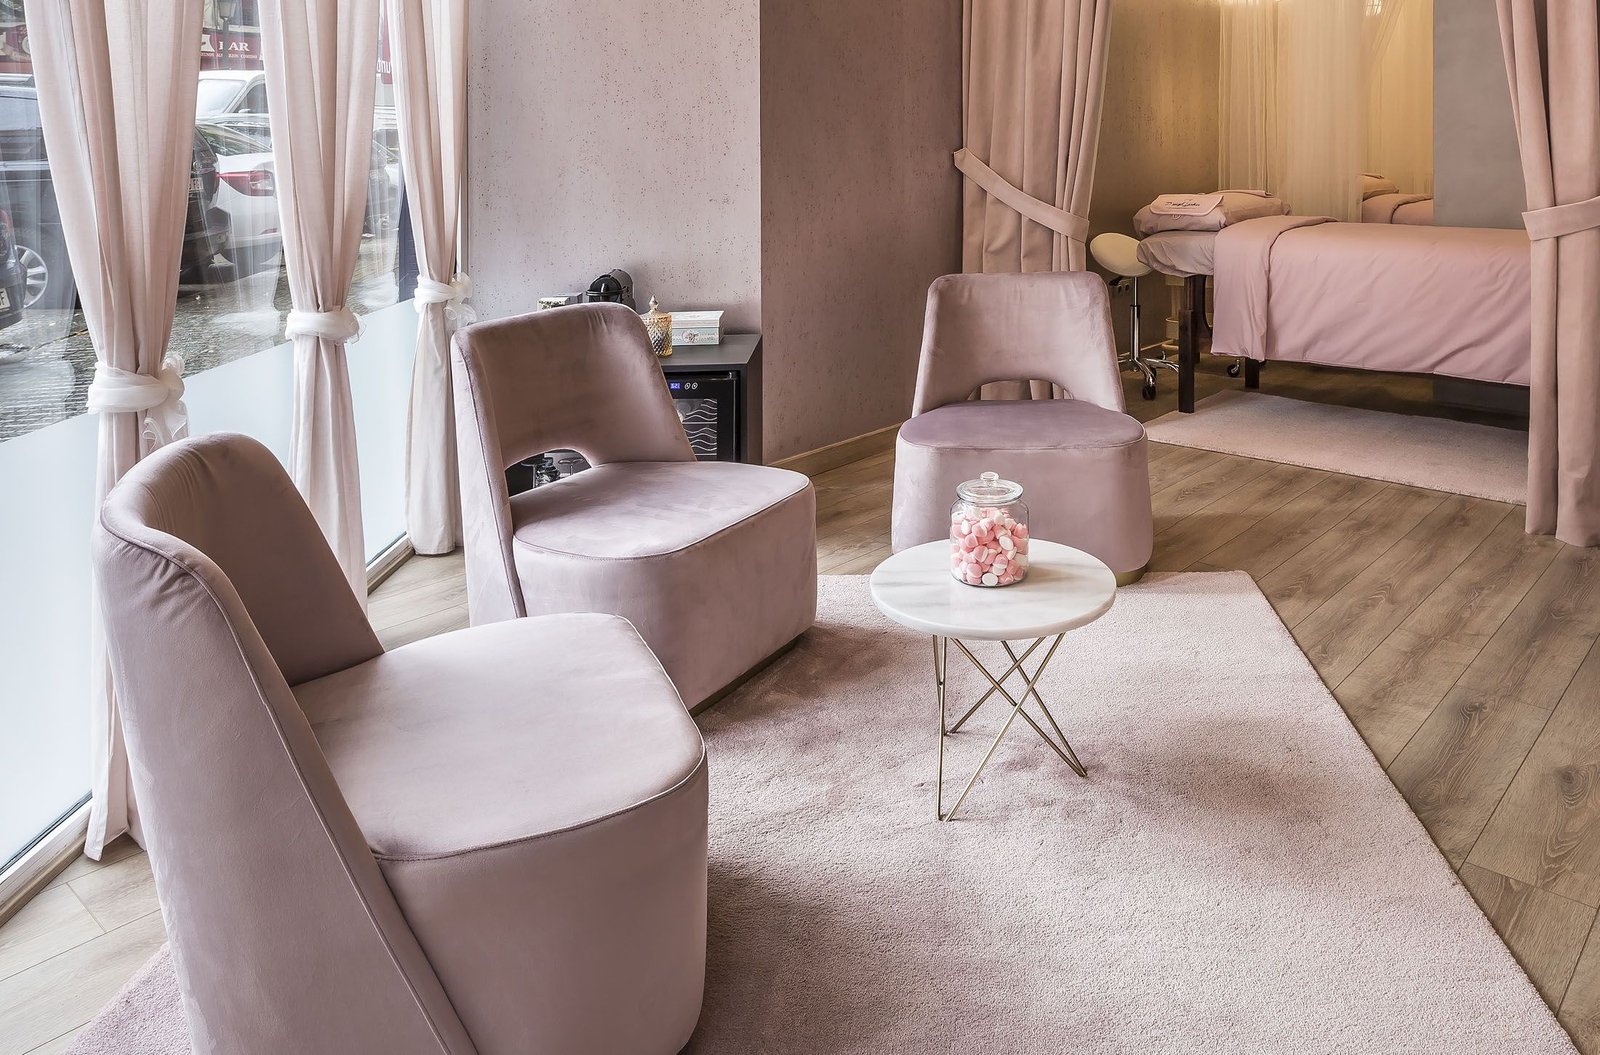 Interiorismo de sala de espera clínica centro de Belleza, acabados con tonos rosas tanto en camas como en butacas y moquetas cortinas.